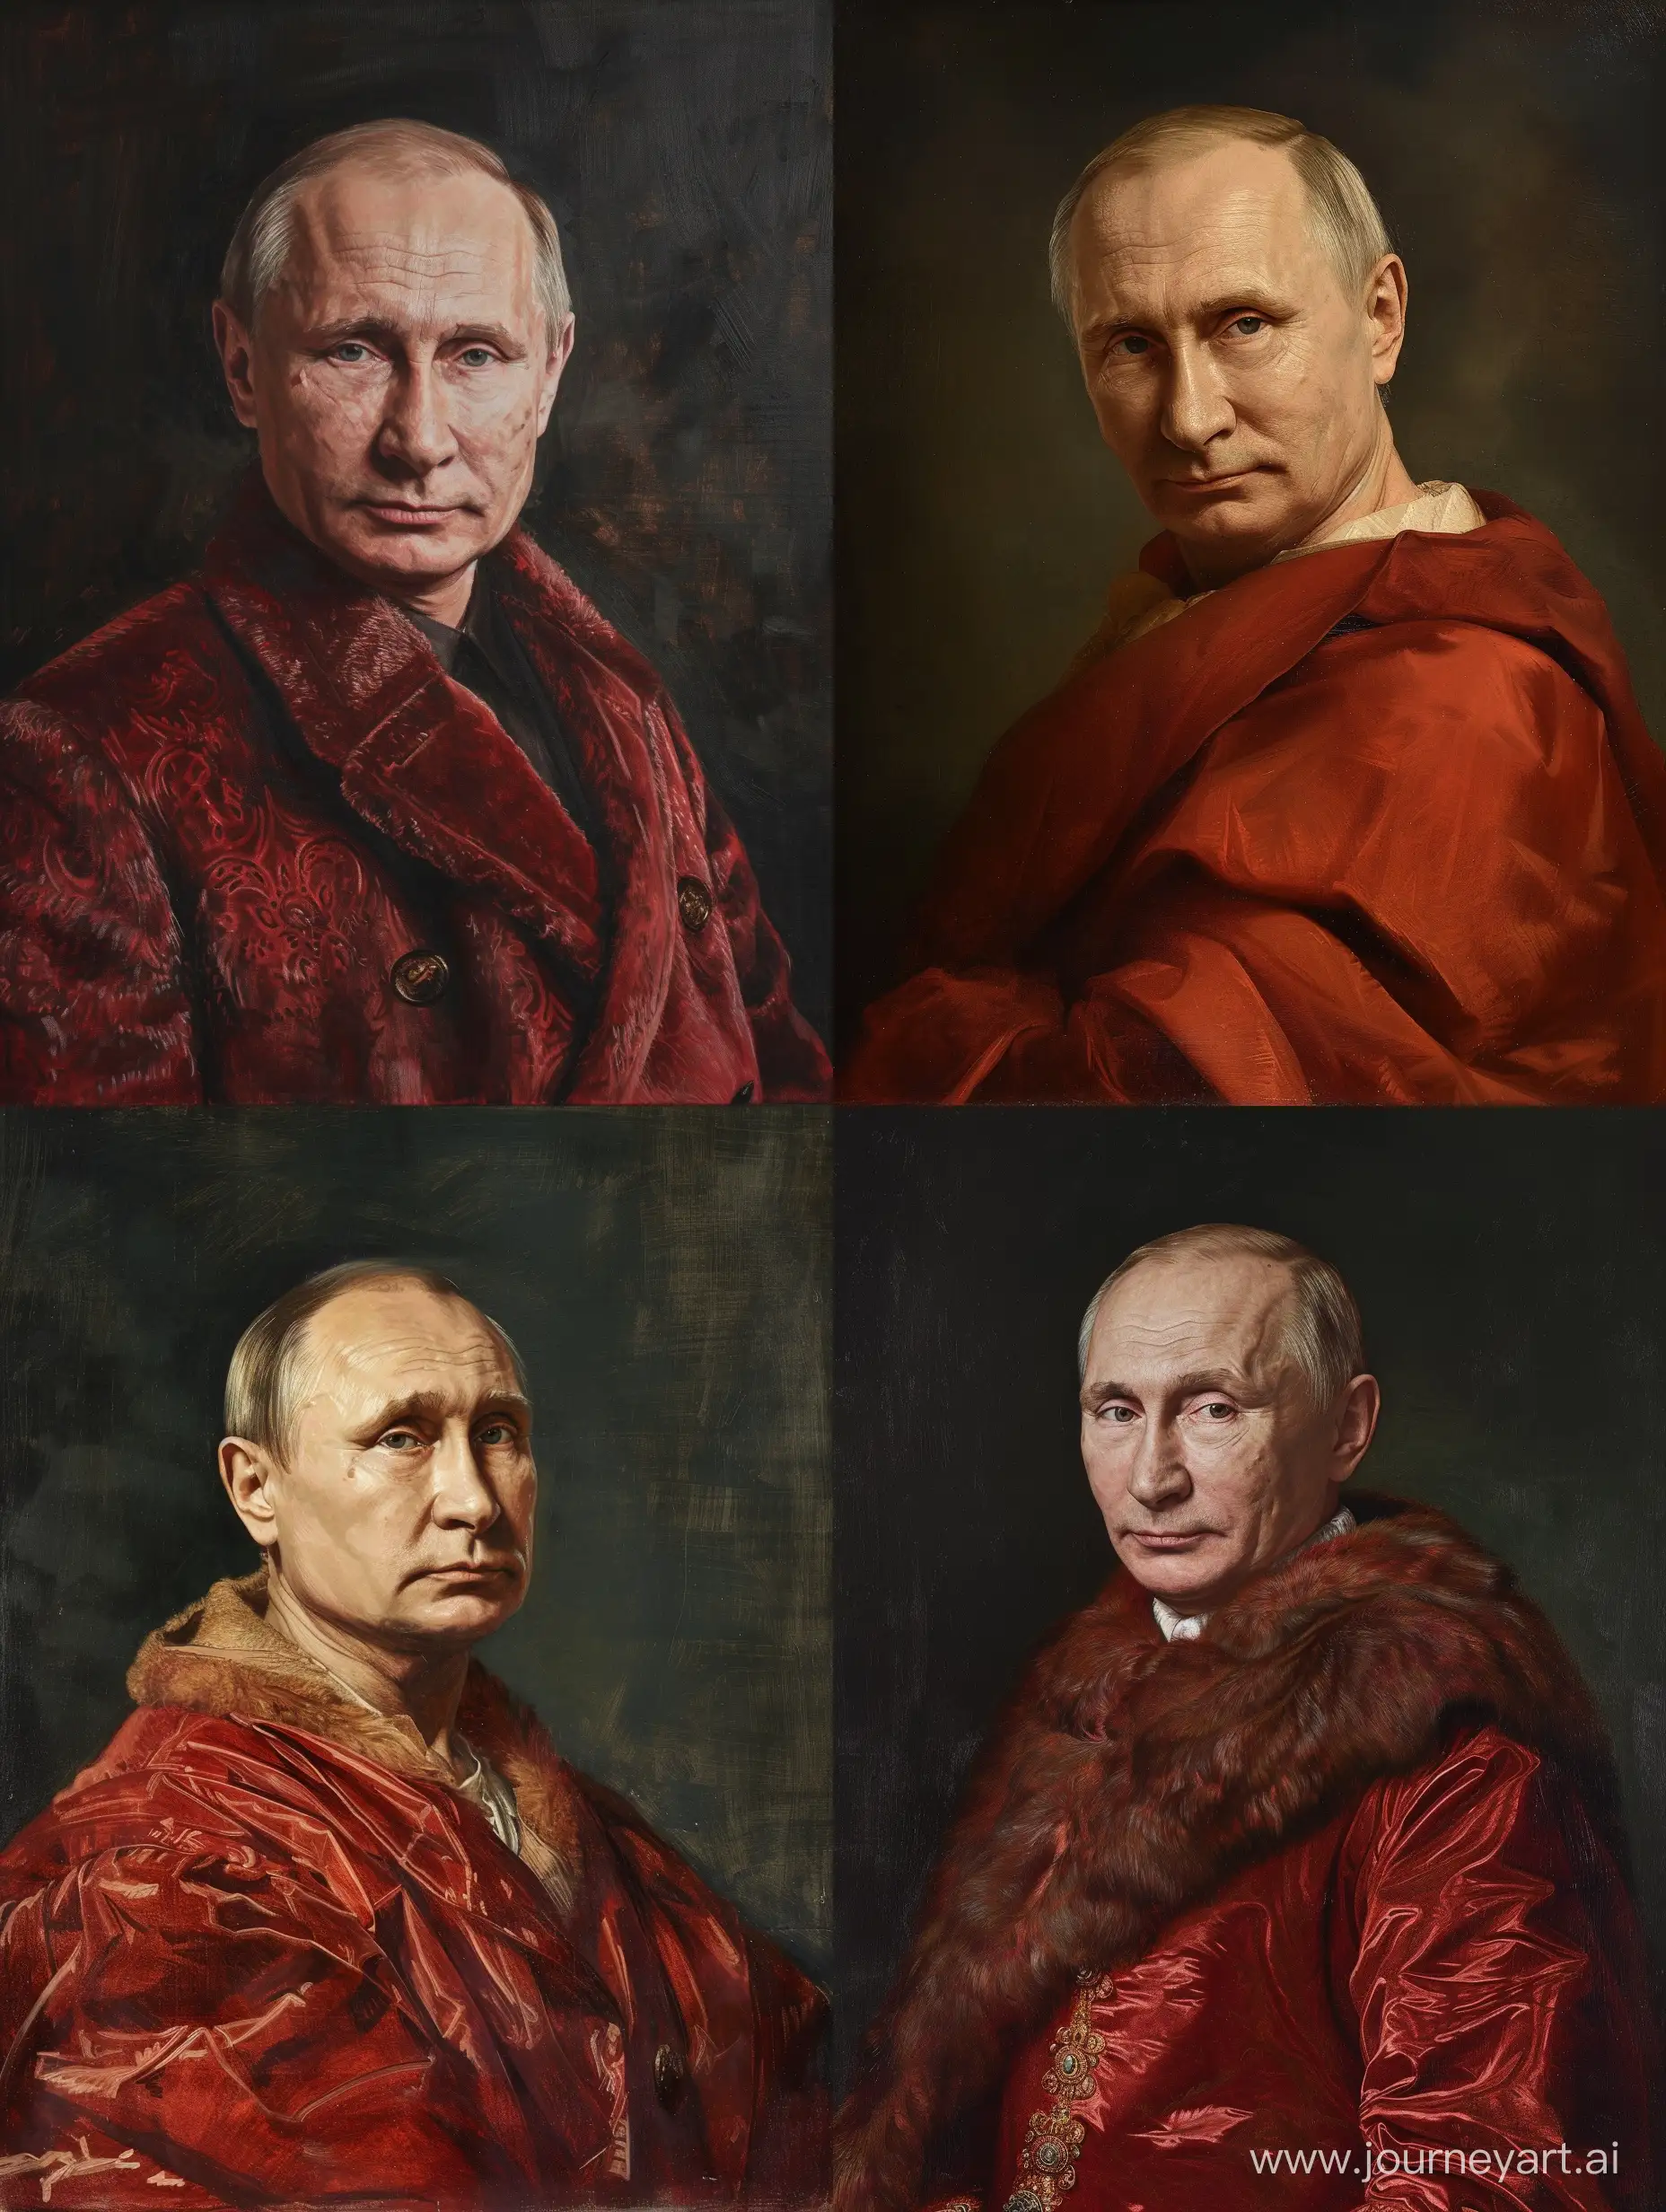 renaissance style portrait of Vladimir Putin